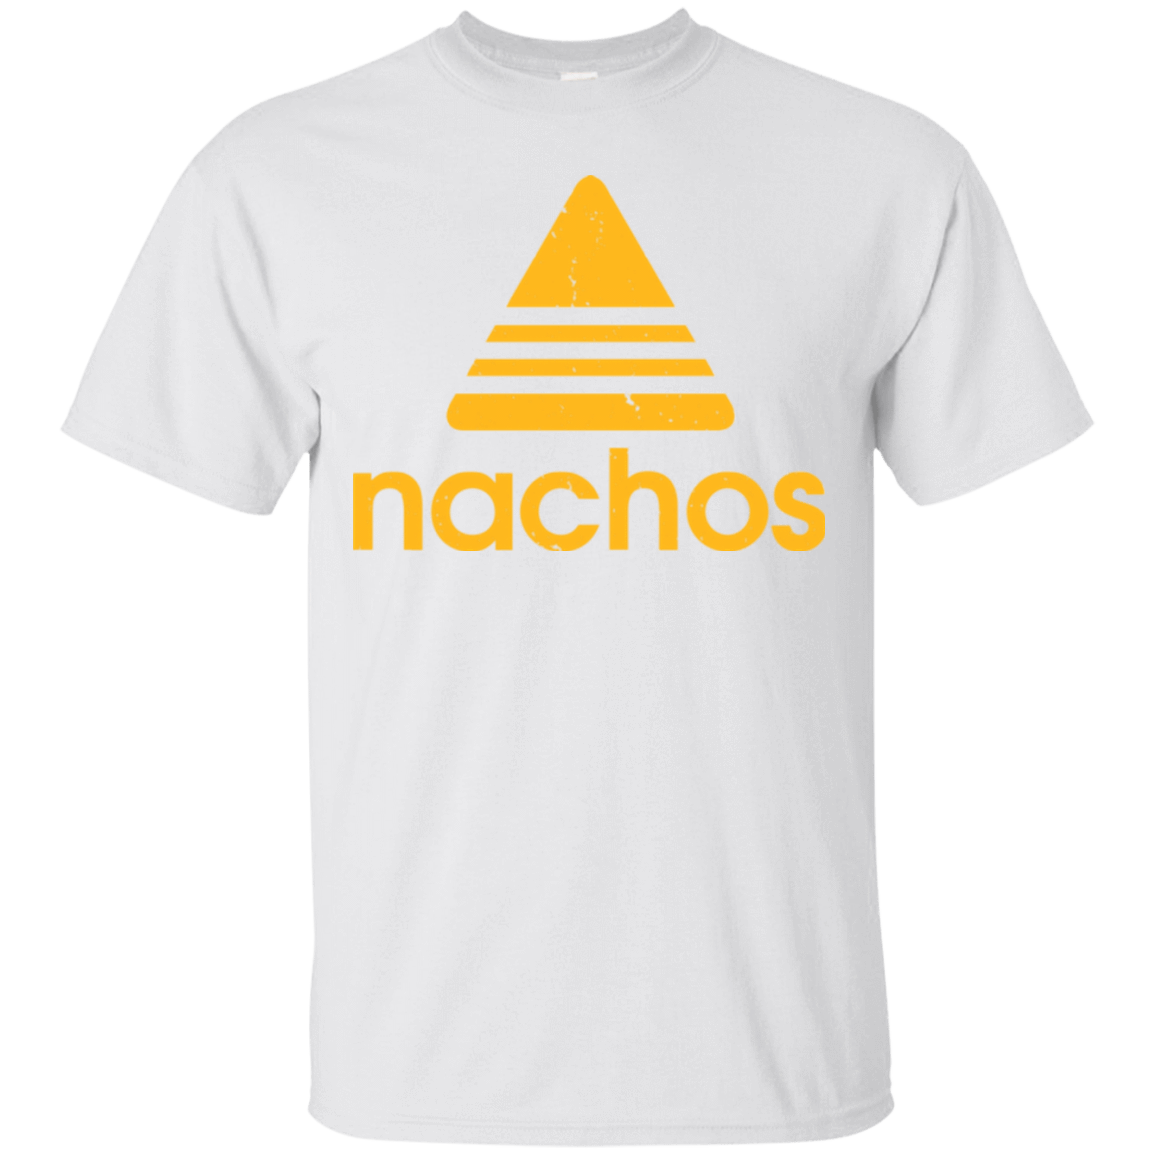 T-Shirts White / Small Nachos T-Shirt